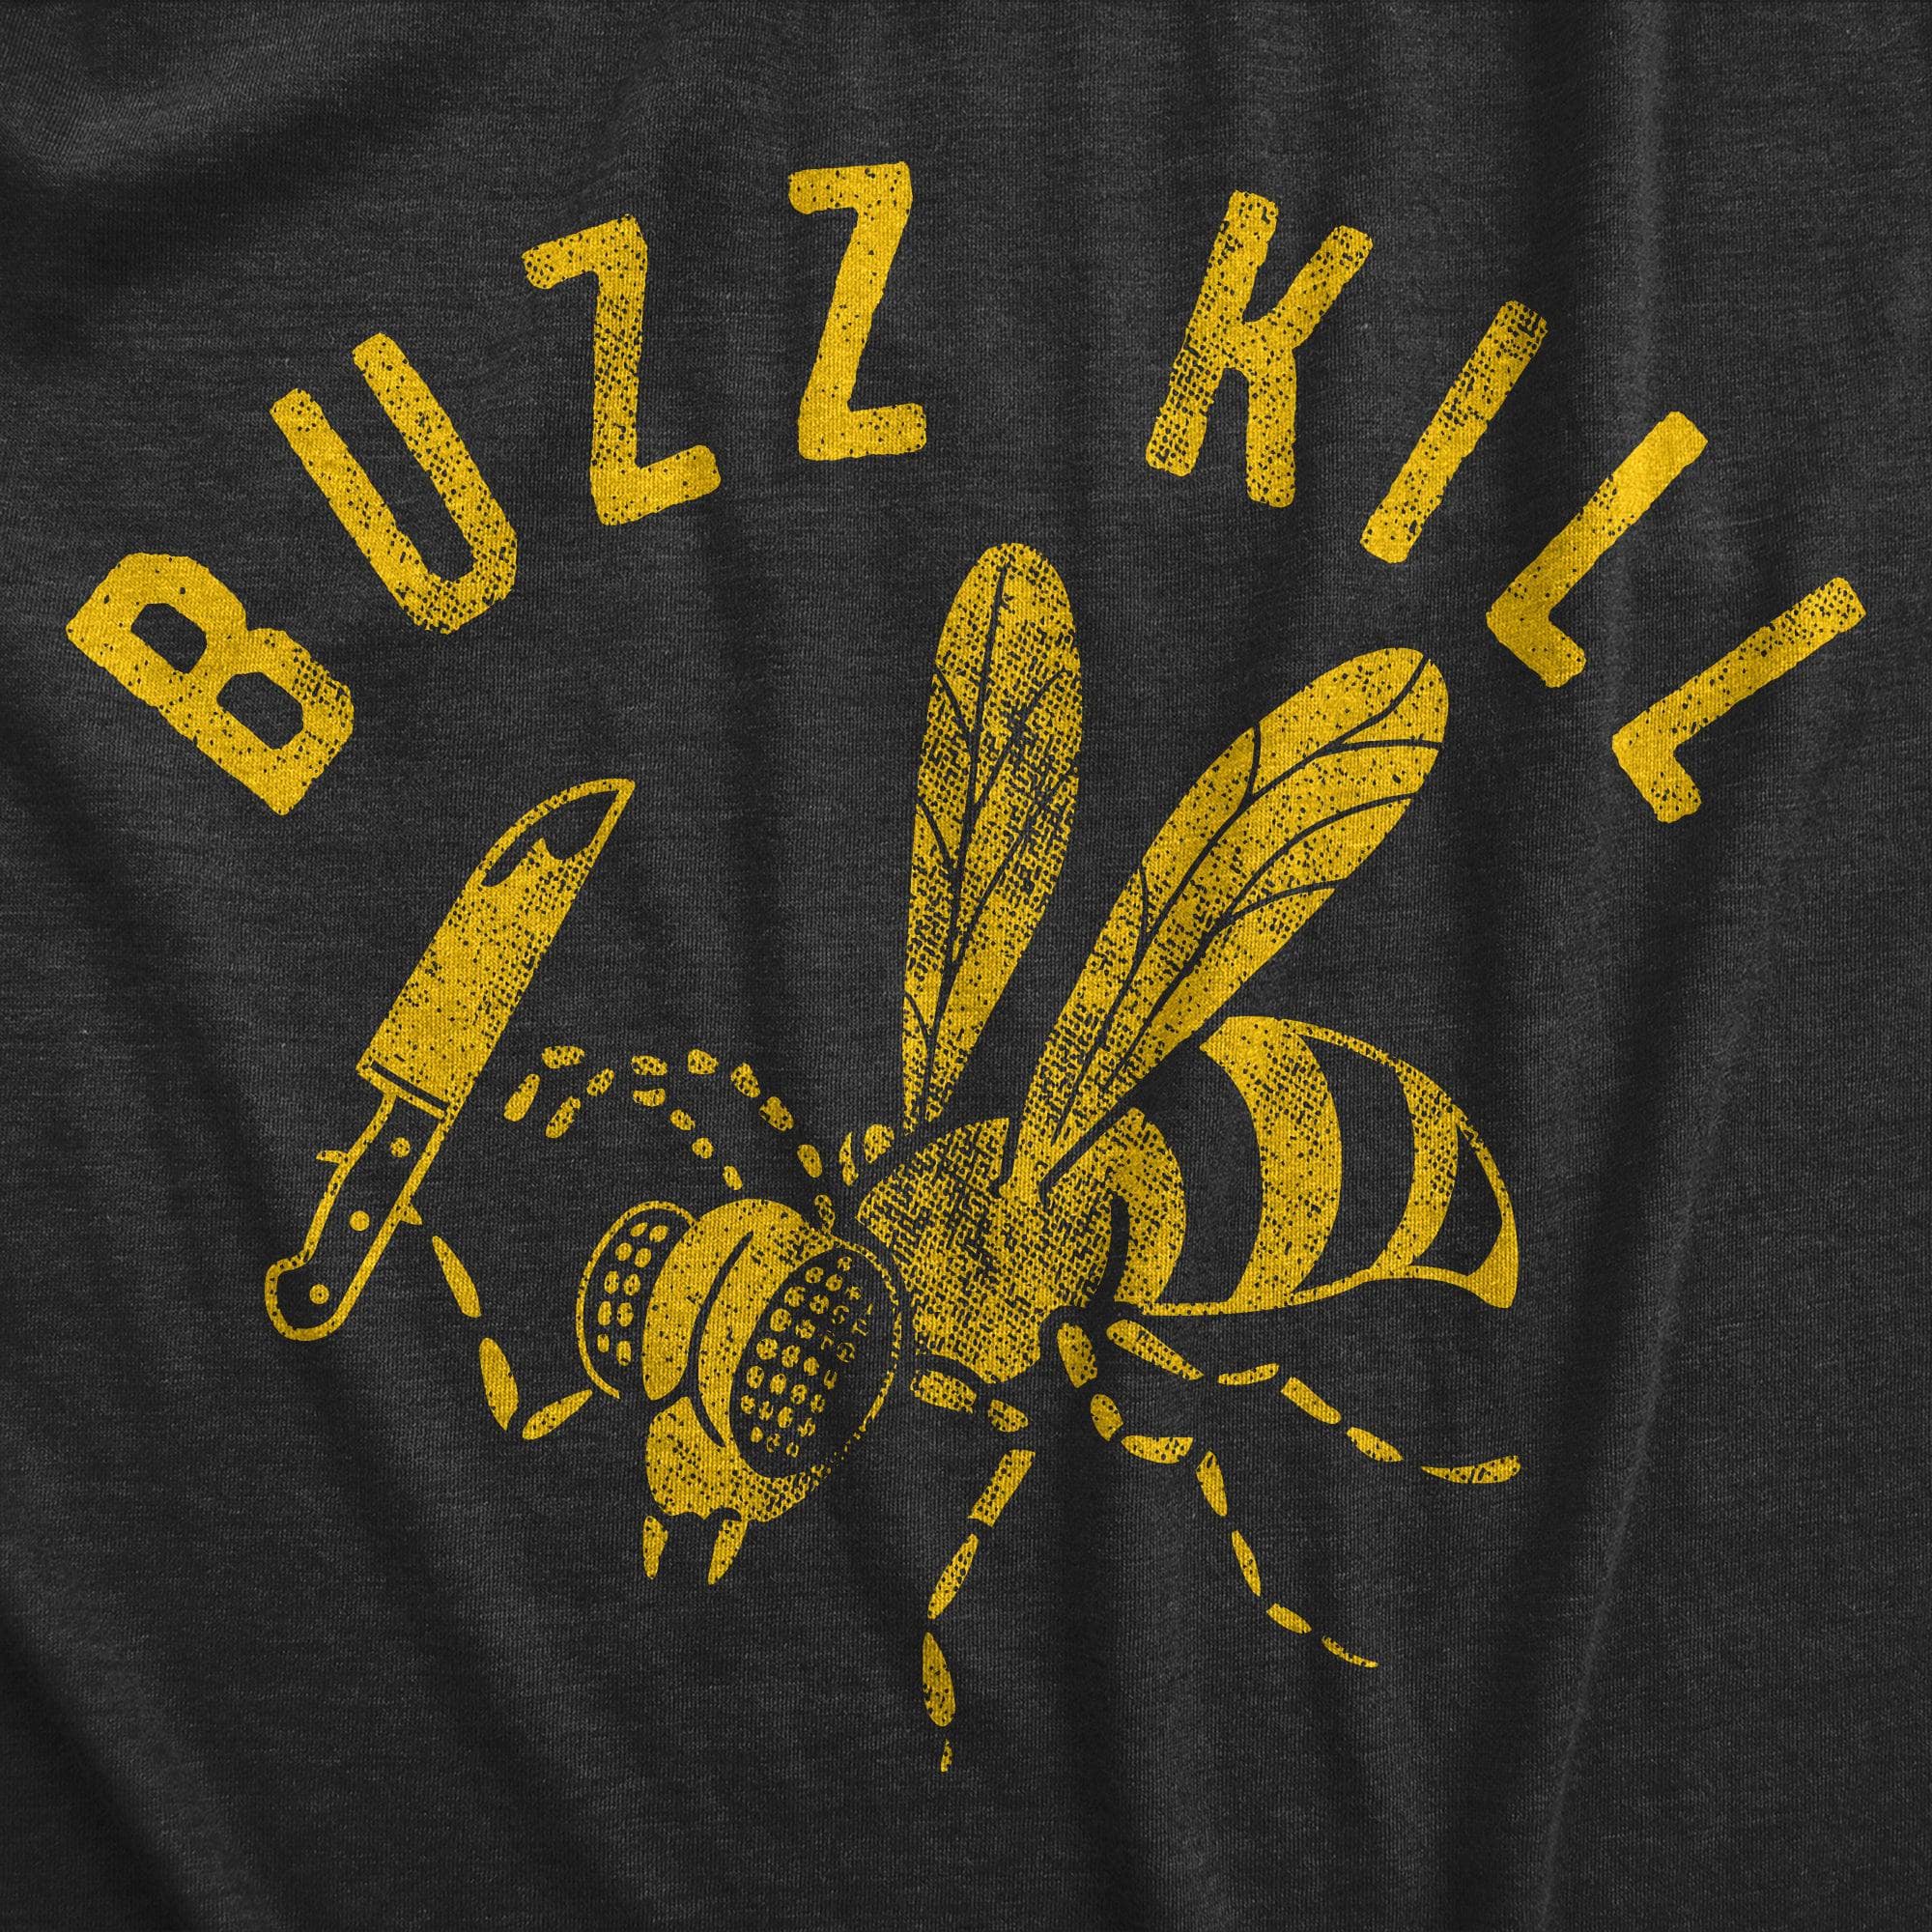 Buzz Kill Women's Tshirt  -  Crazy Dog T-Shirts